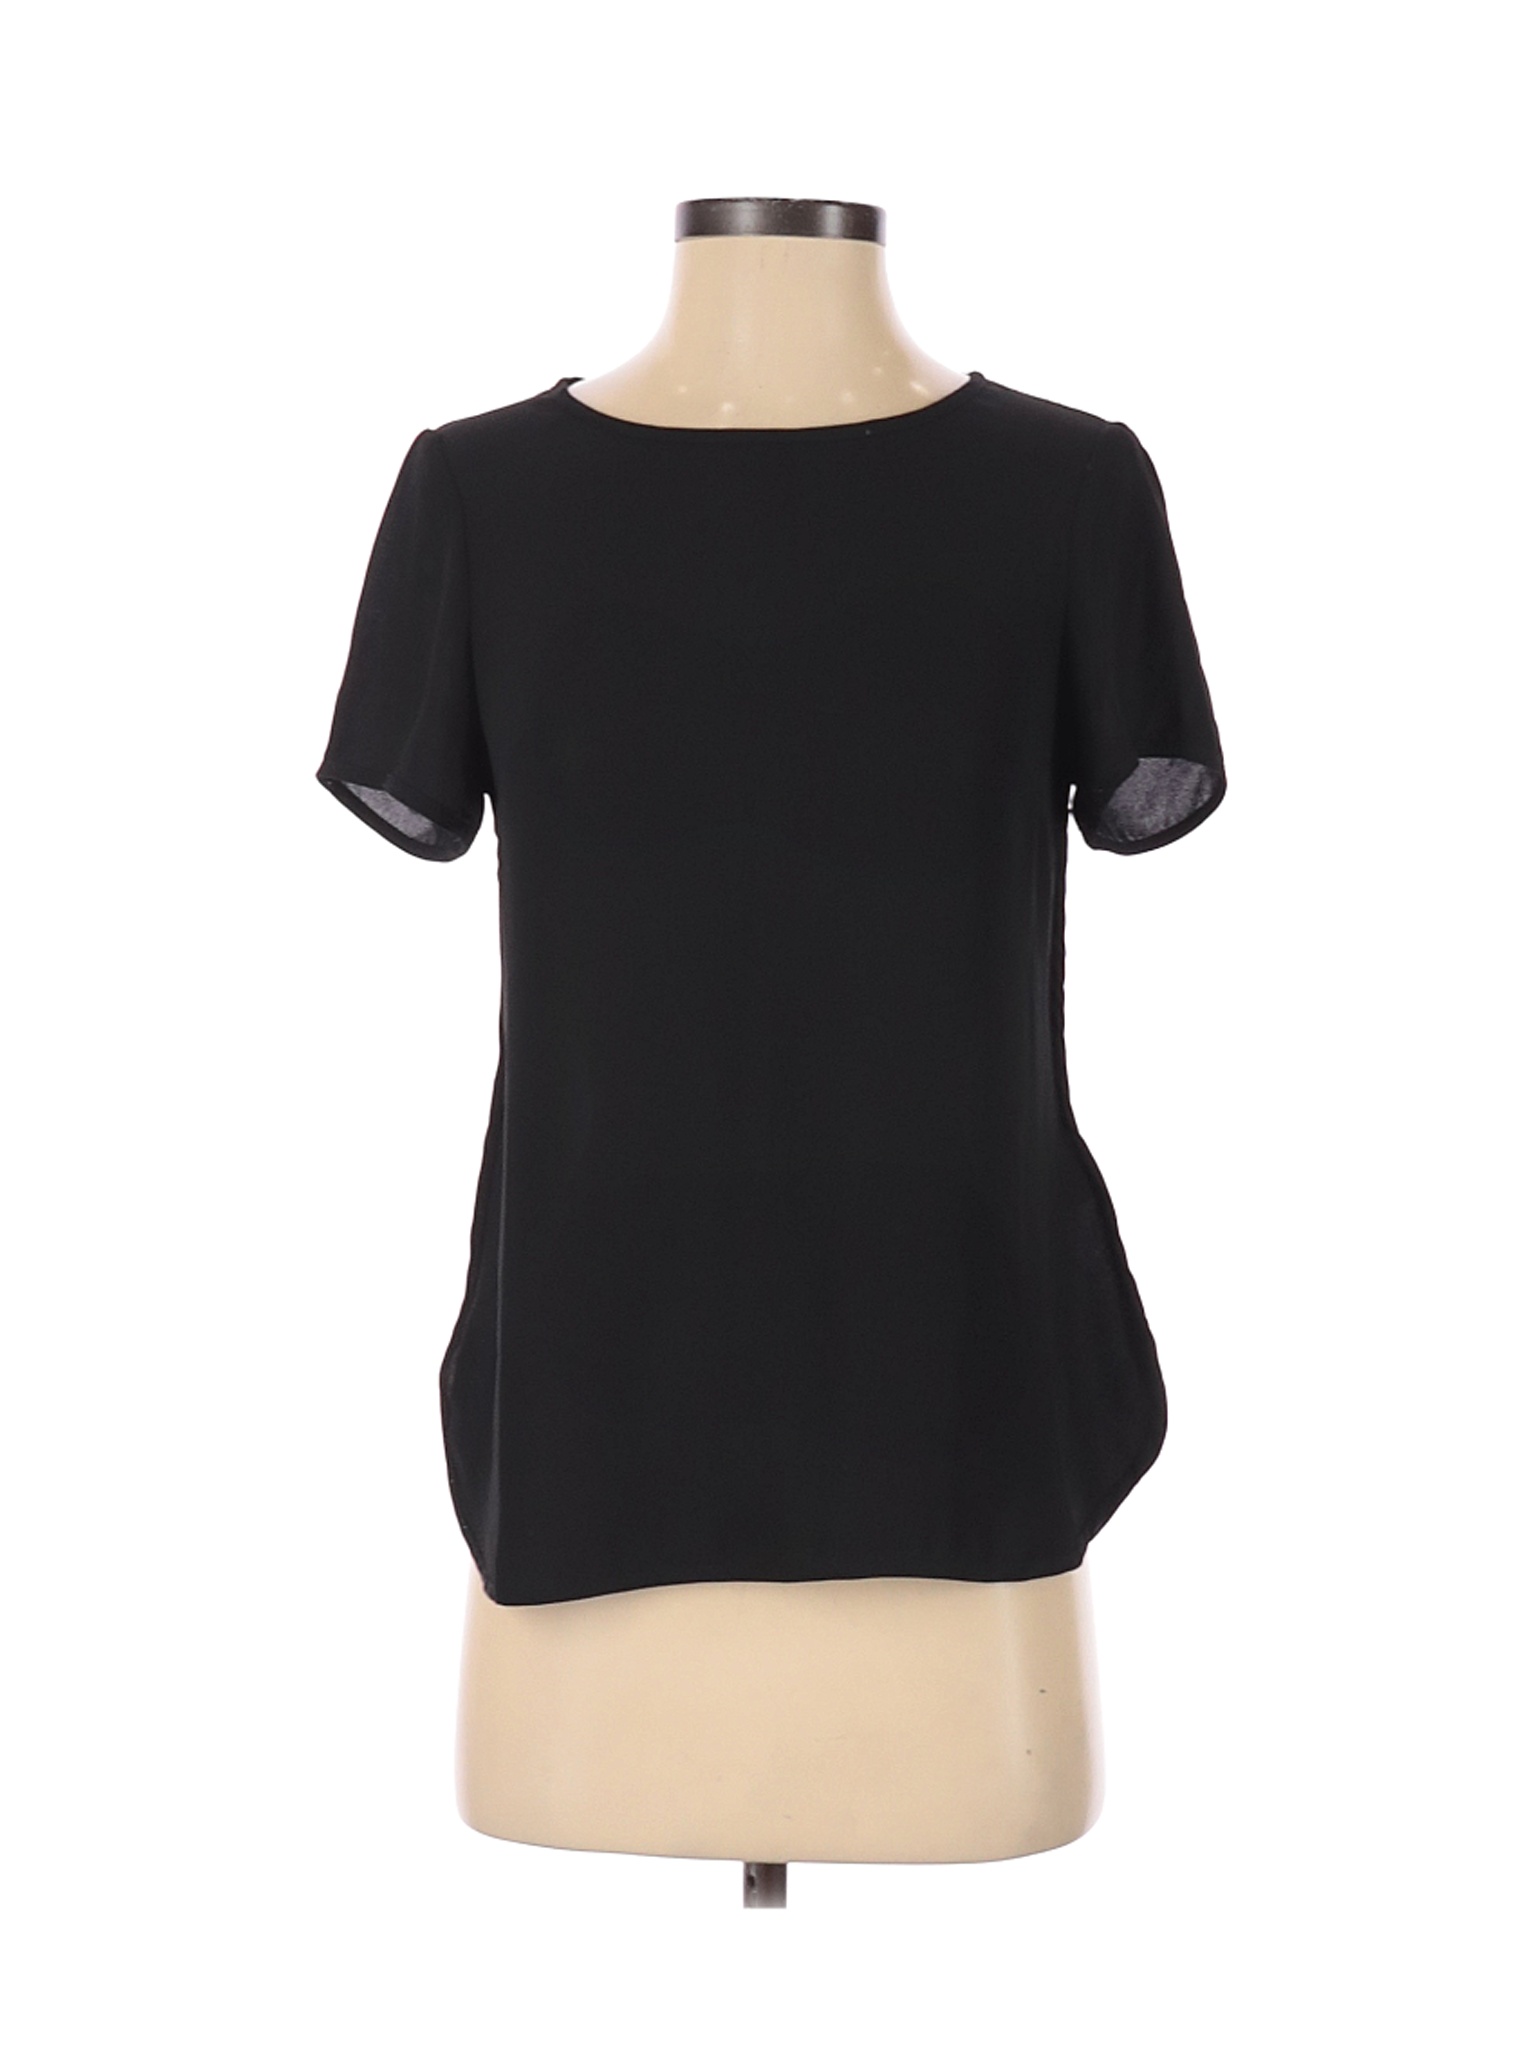 Banana Republic Women Black Short Sleeve Blouse 0 | eBay